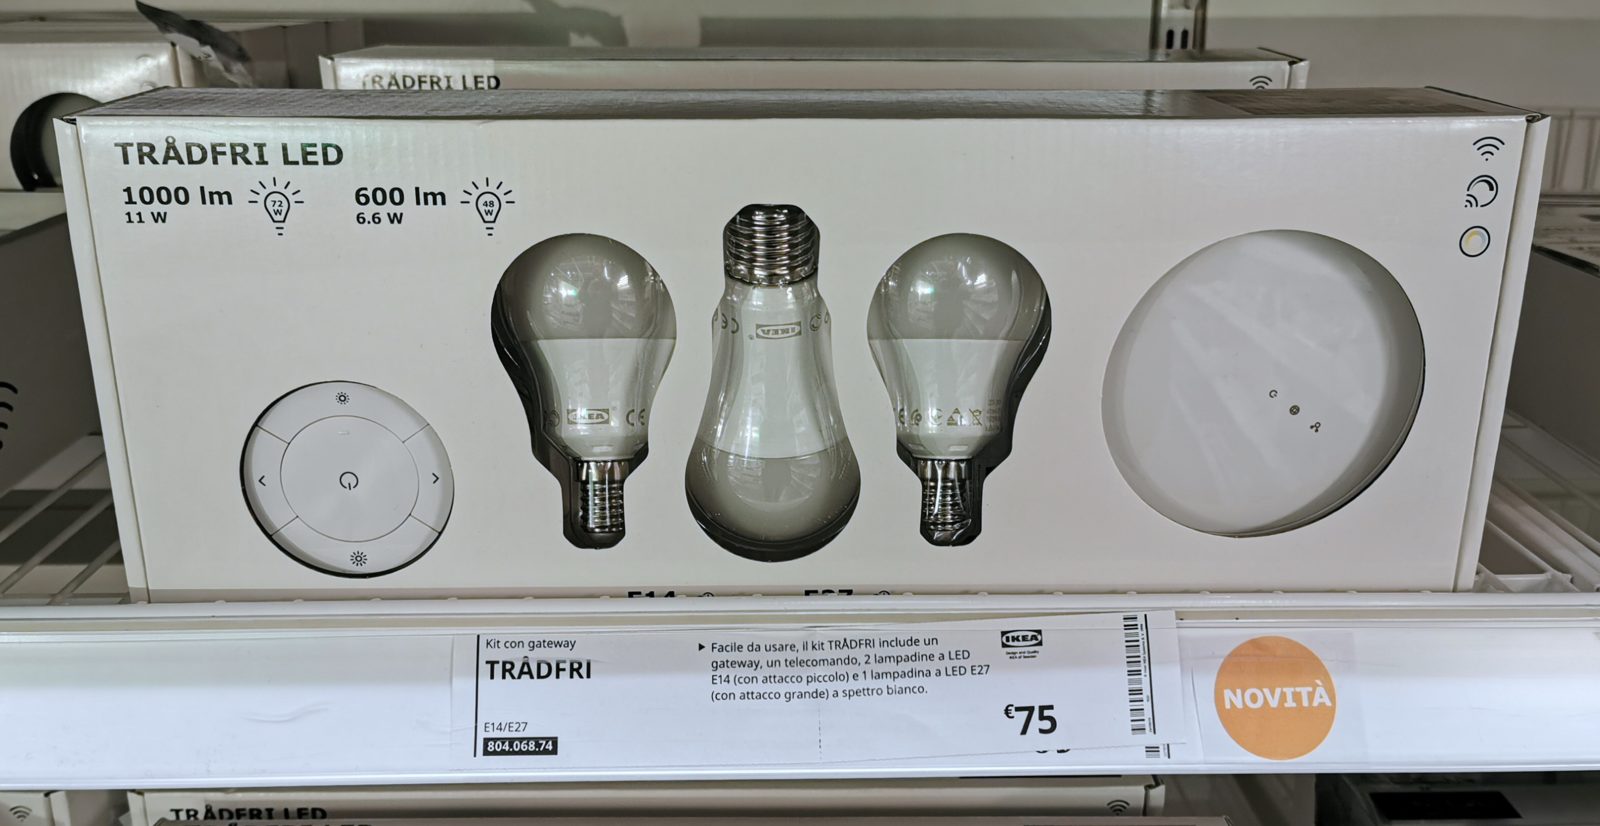 Nuovi Kit Smart Home Ikea portano lampade e gateway Zigbee a collaborare con Alexa, Homekit e Google